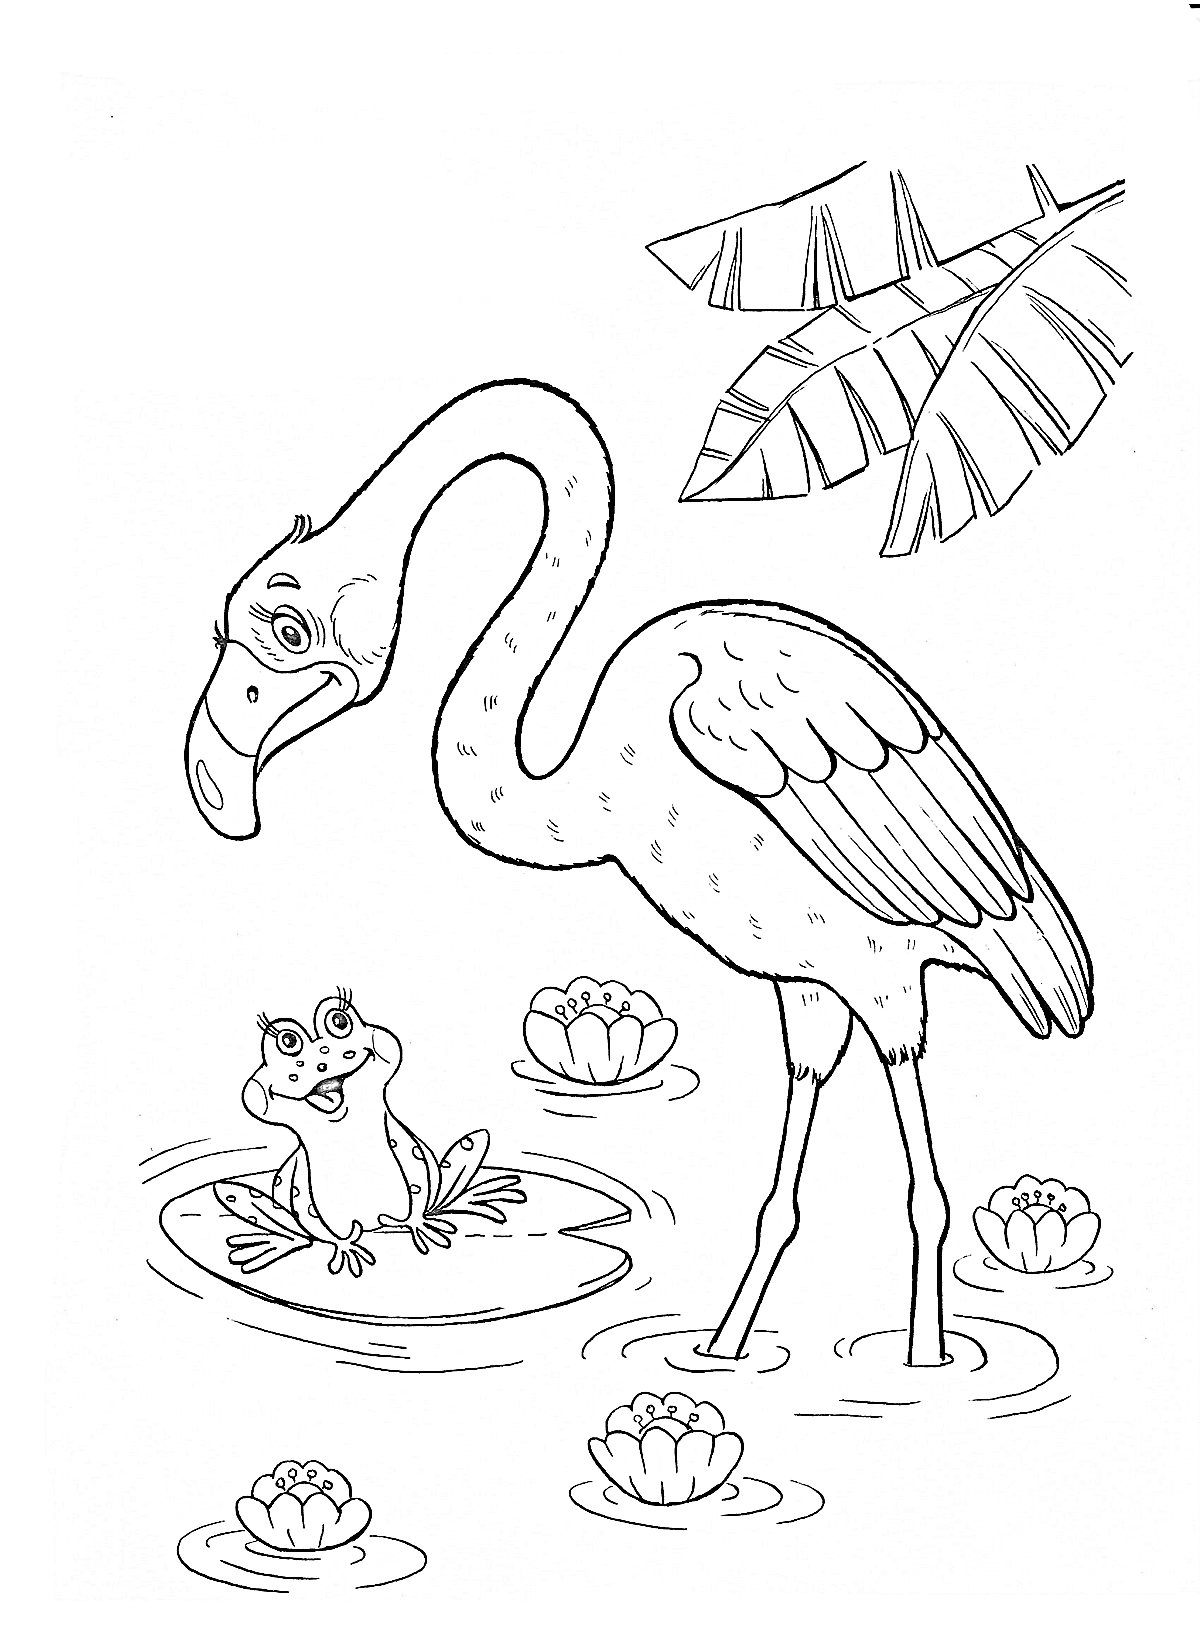 Раскраска Фламинго, лягушка на кувшинке и водные лилии